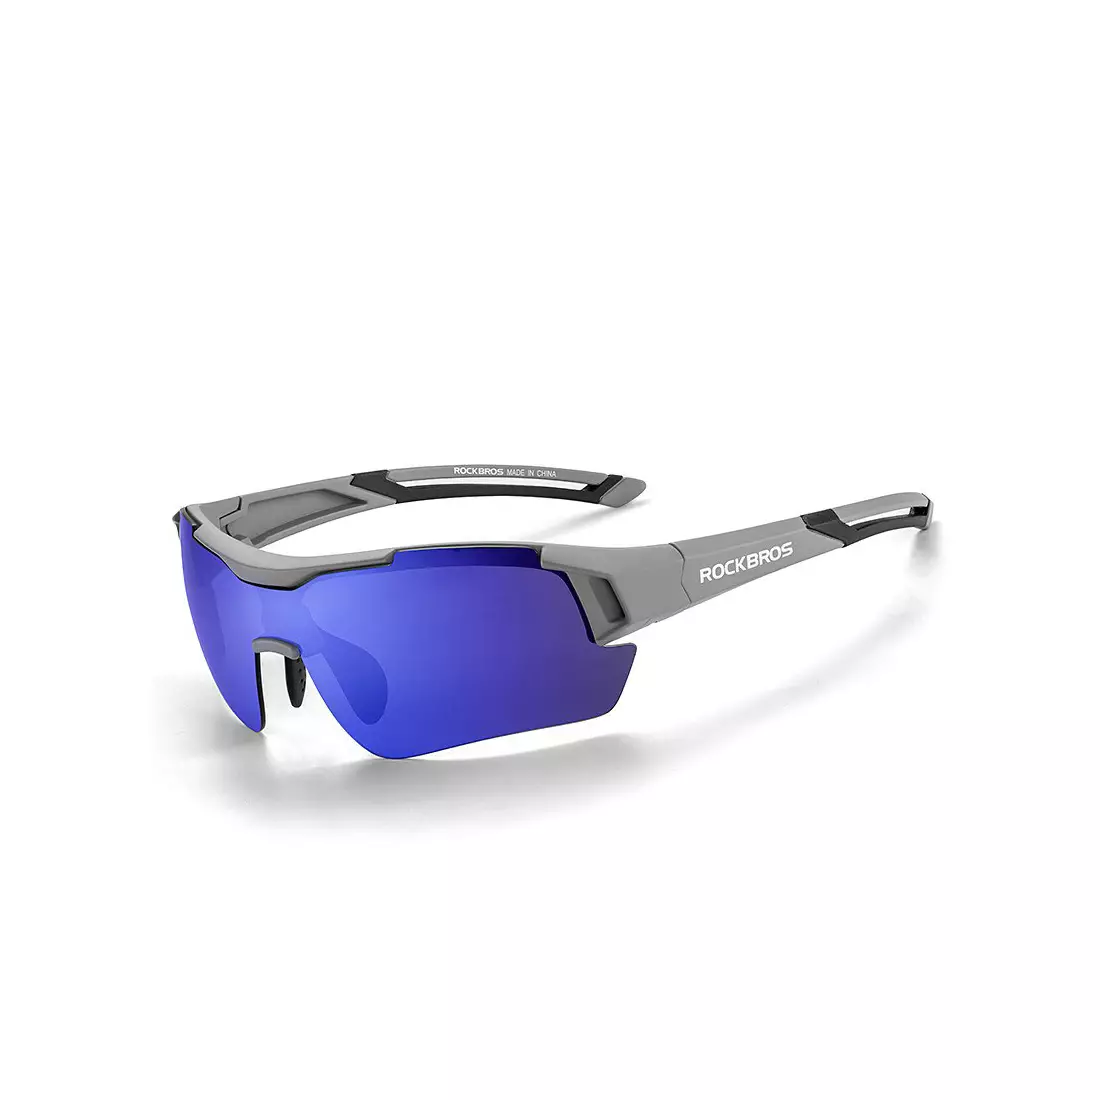 Rockbros 10117 Fahrrad Sportbrille mit polarisiertem black-grey